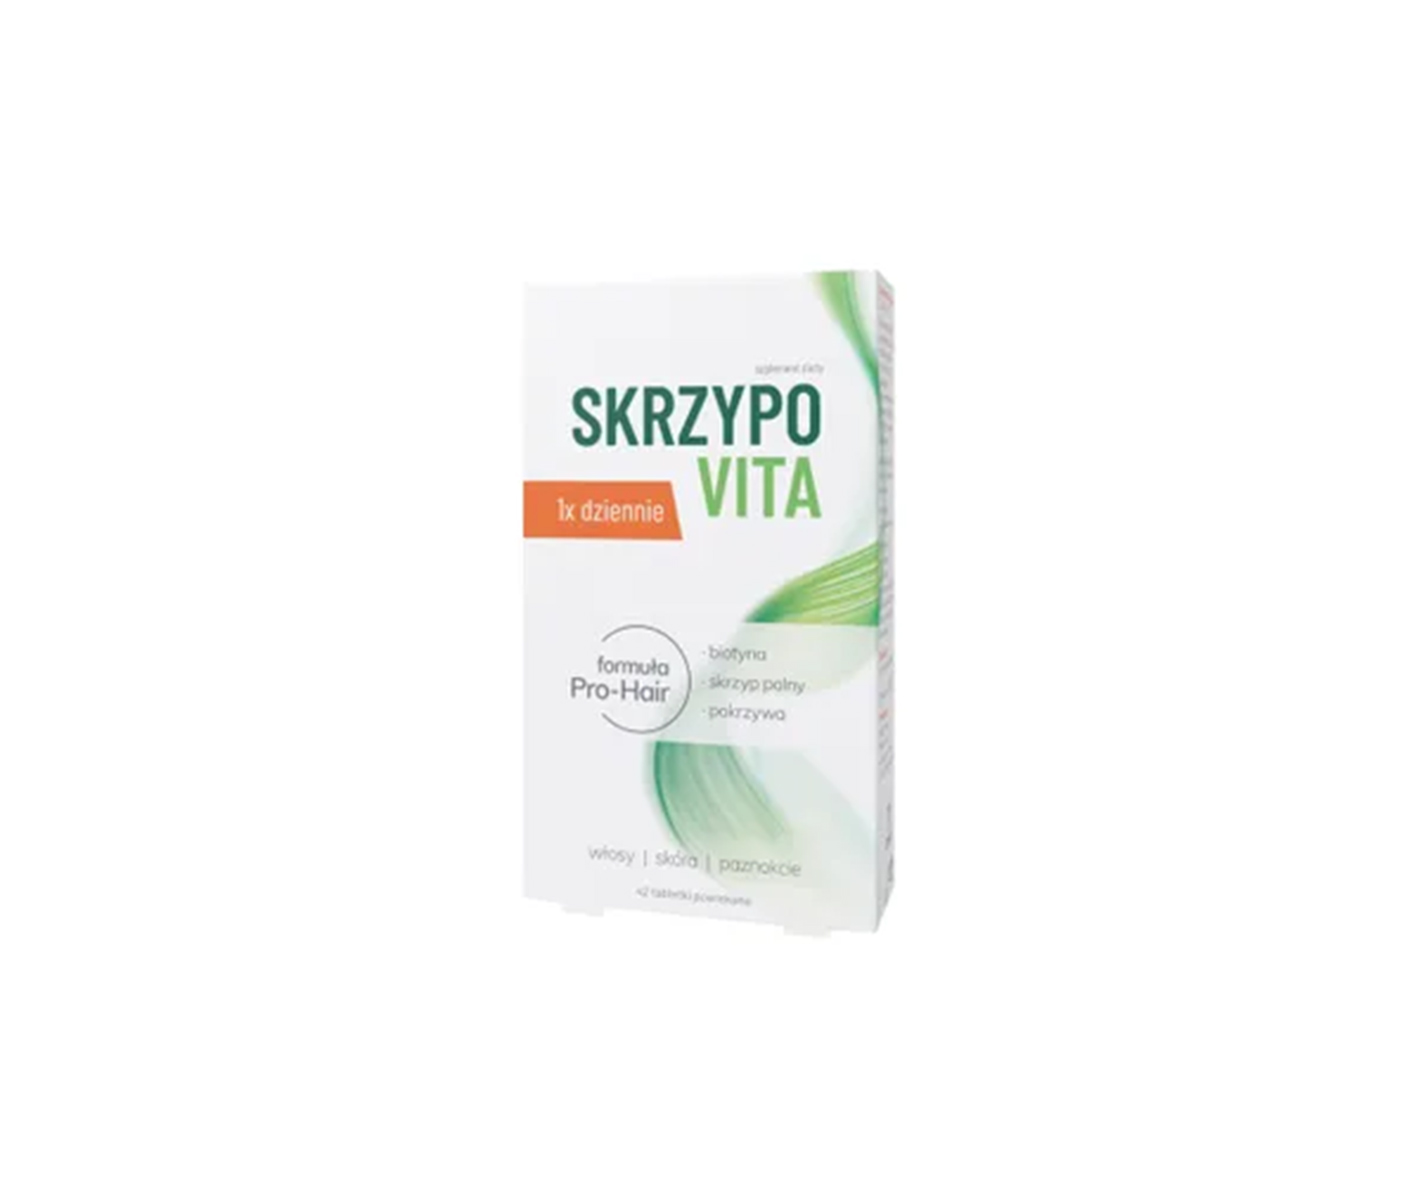 Natur Produkt Pharma, Sprzypovita, dietary supplement